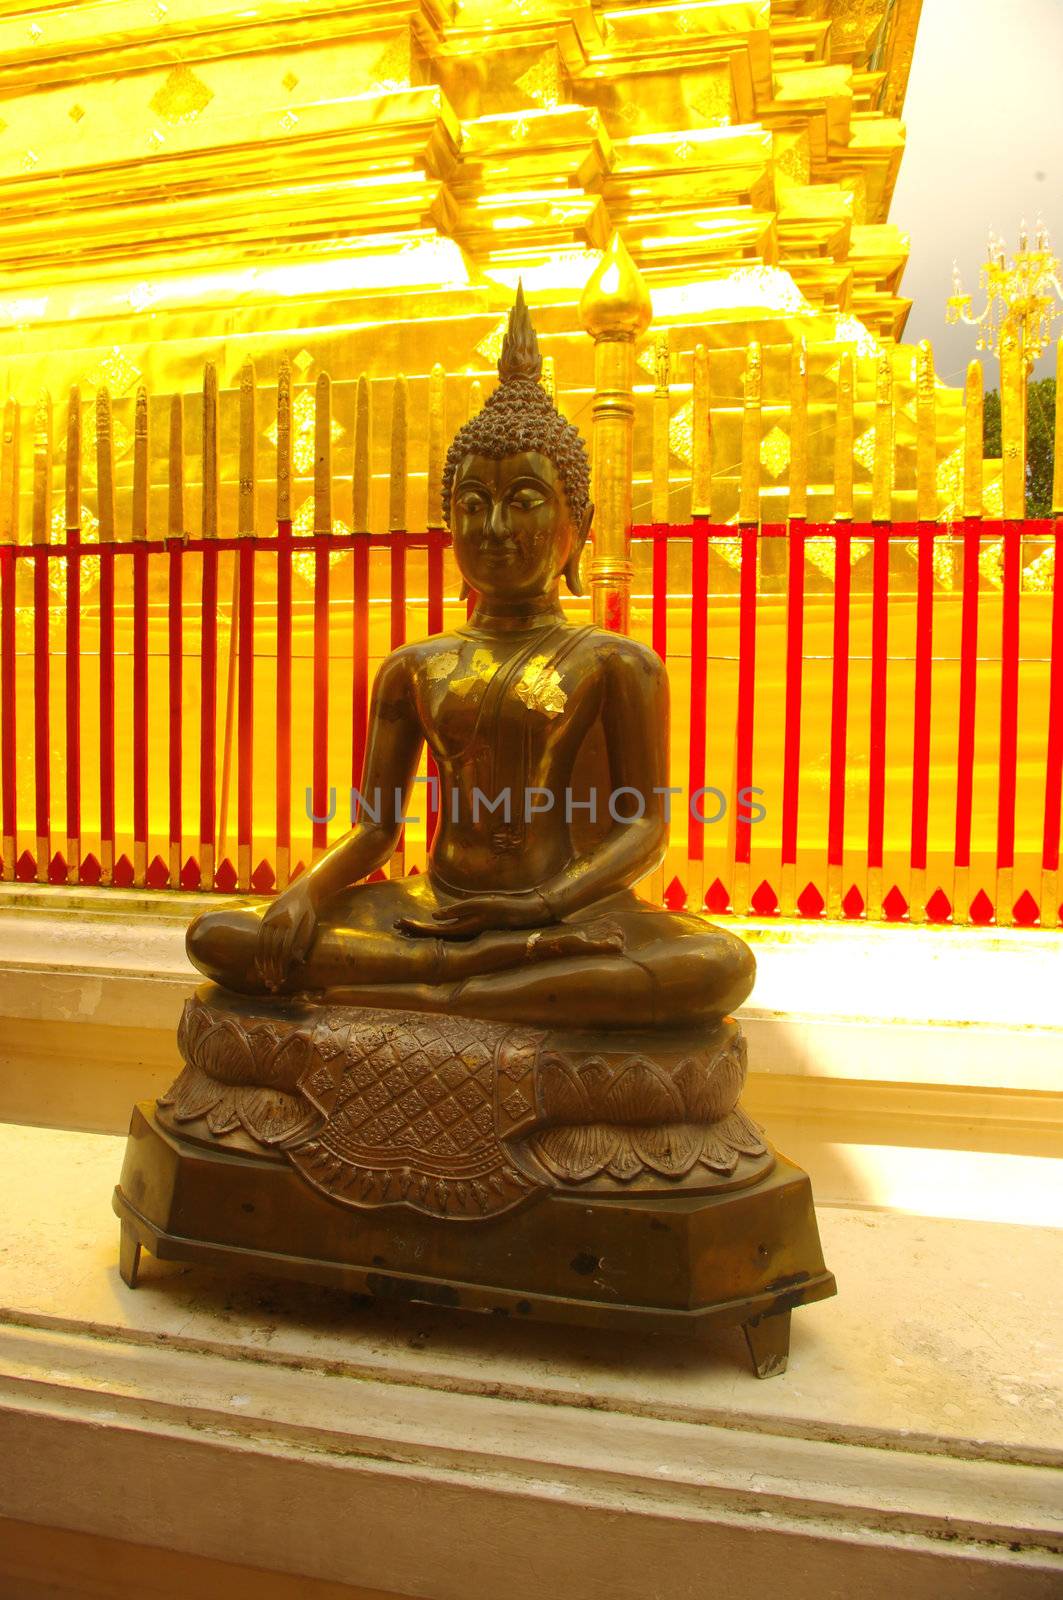 Bouddha de bronze by Duroc